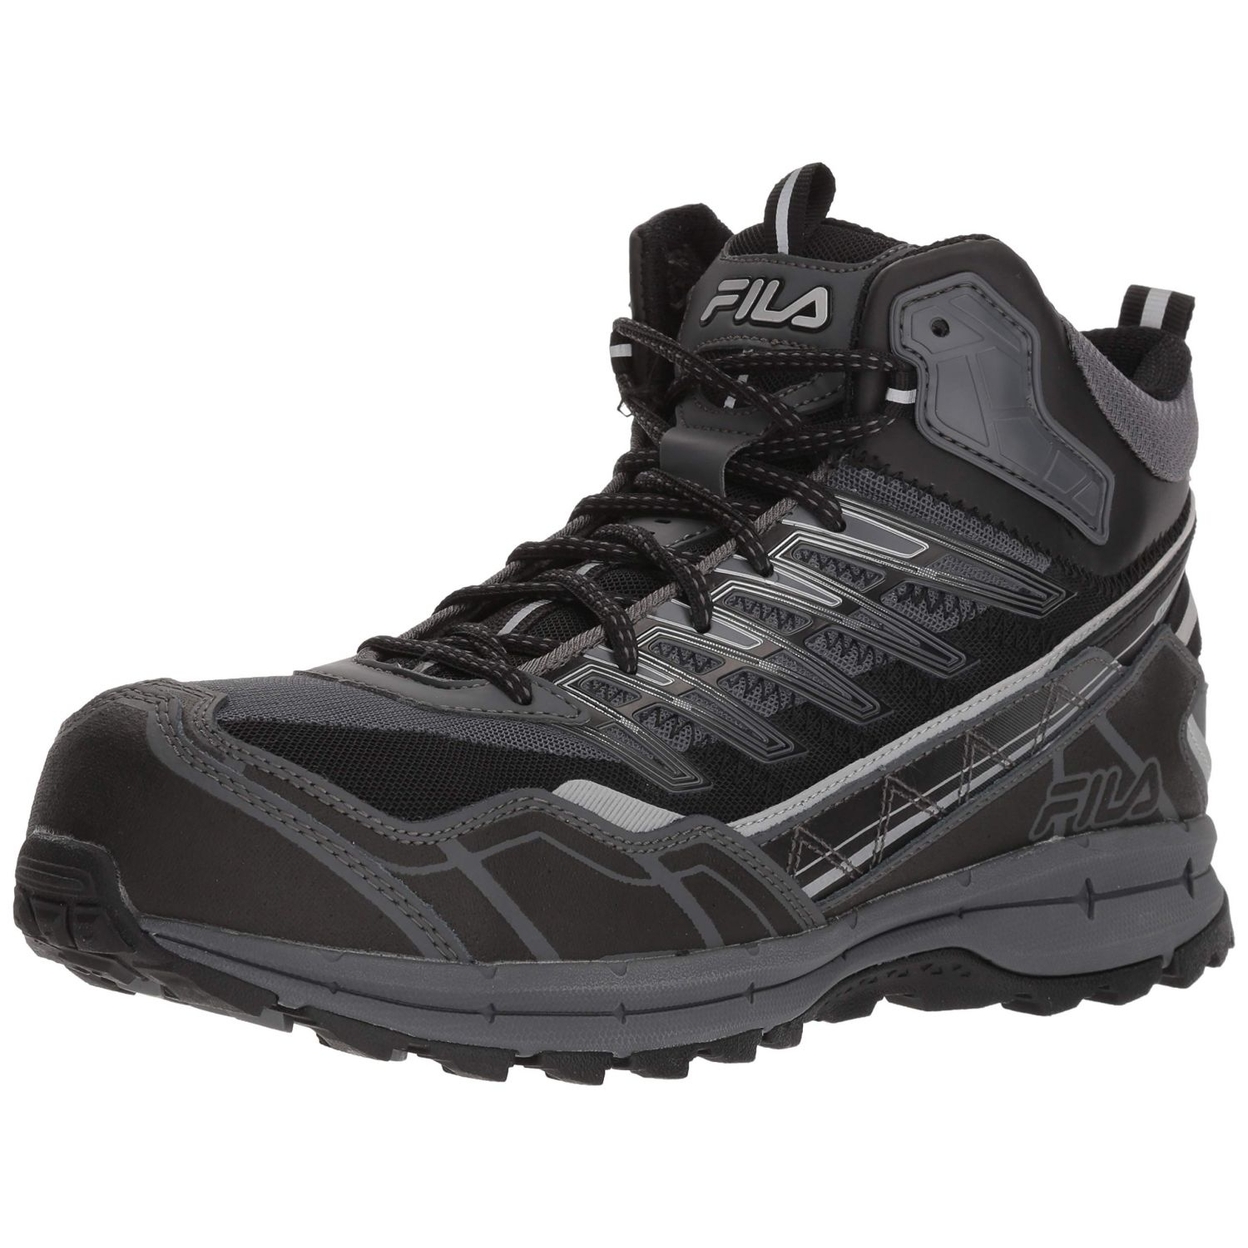 Fila Men's Hail Storm 3 Mid Composite Toe Trail Work Shoes Ct CSRK/BLK/MSIL - CSRK/BLK/MSIL, 9